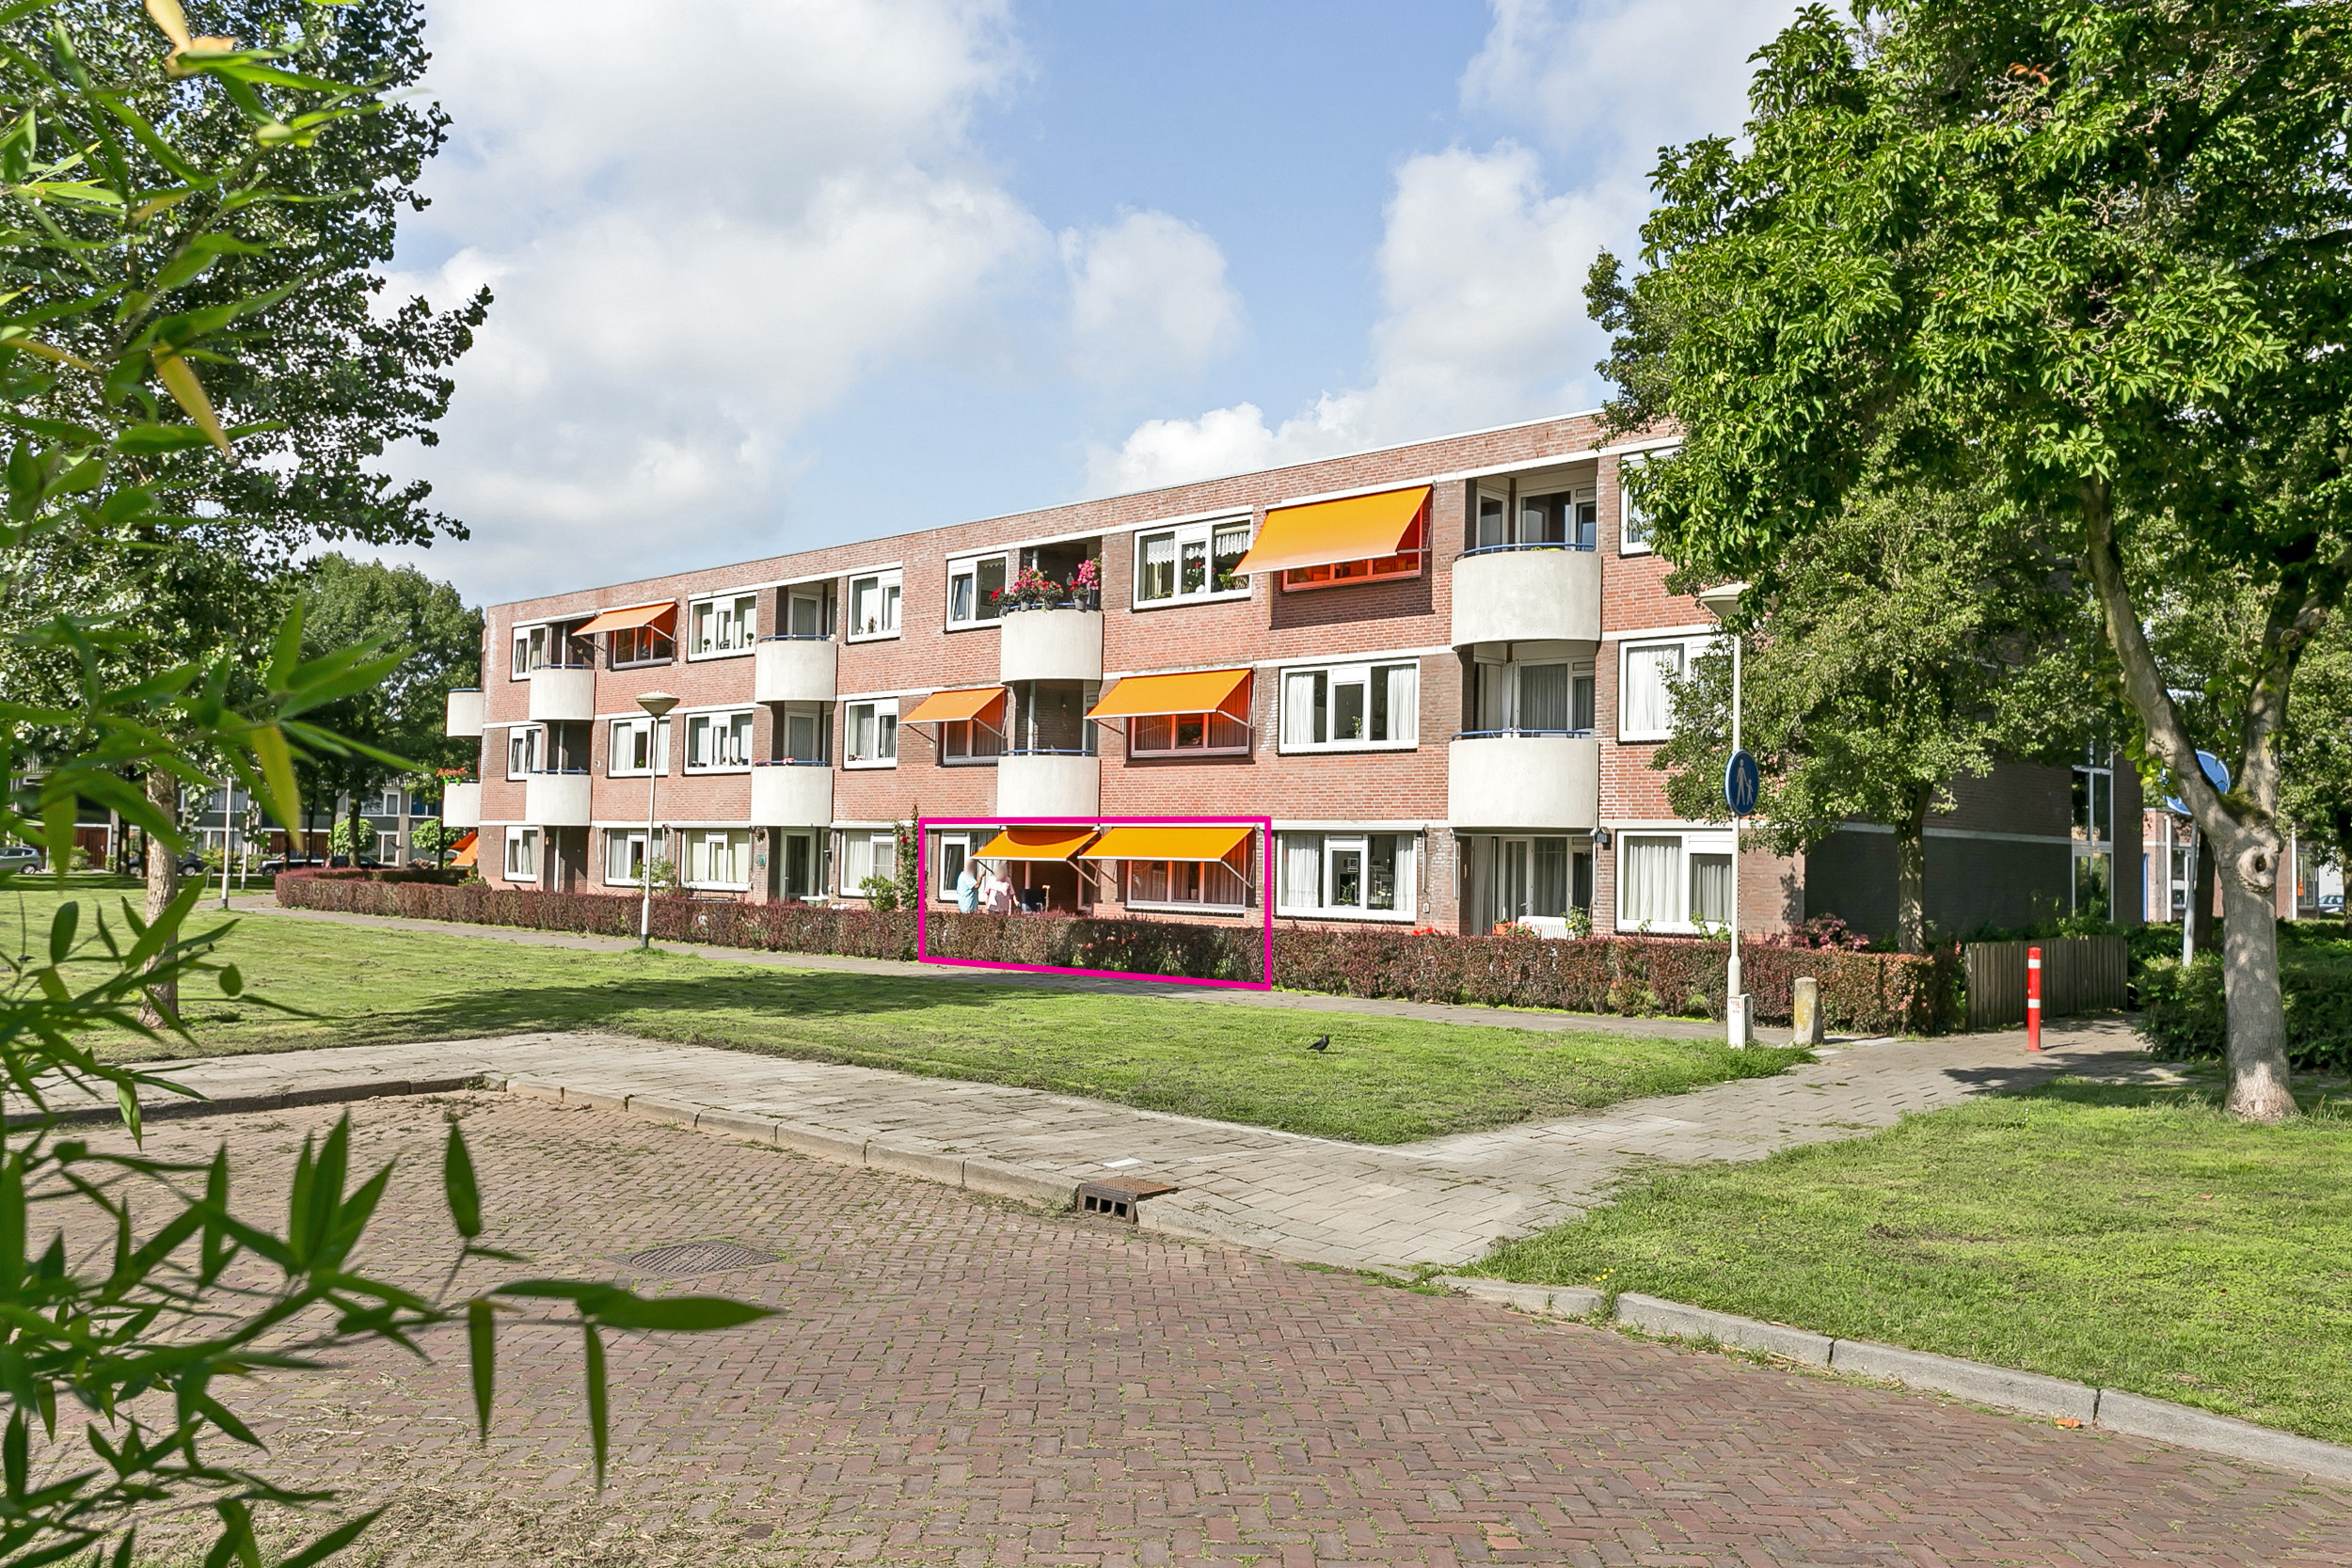 Rijnauwenstraat 21, 4834 LK Breda, Nederland